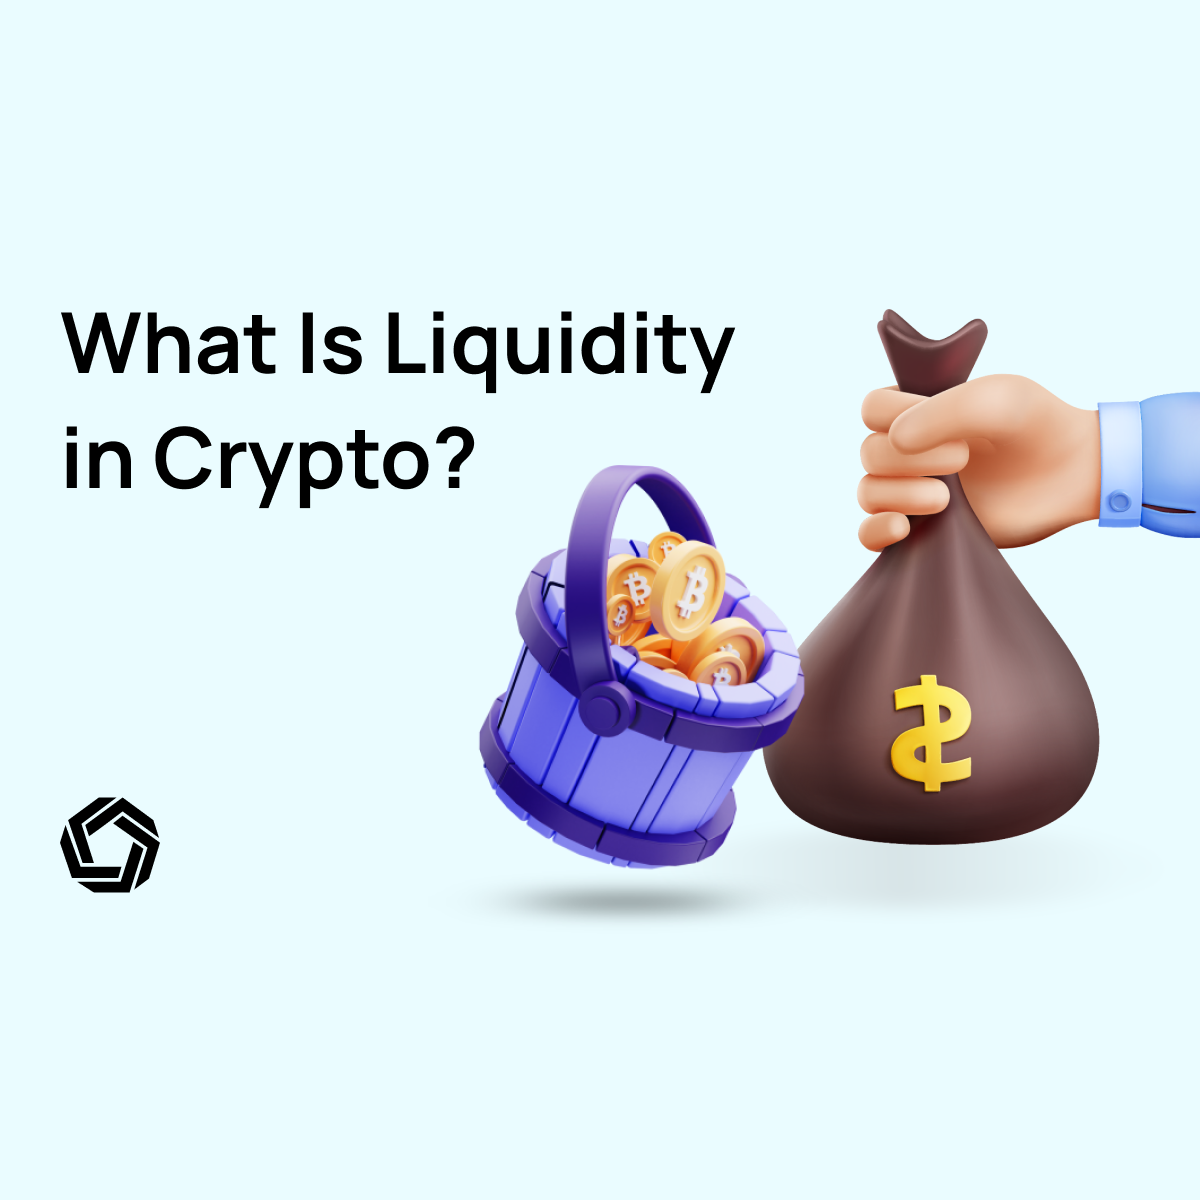 Liquidity in Crypto